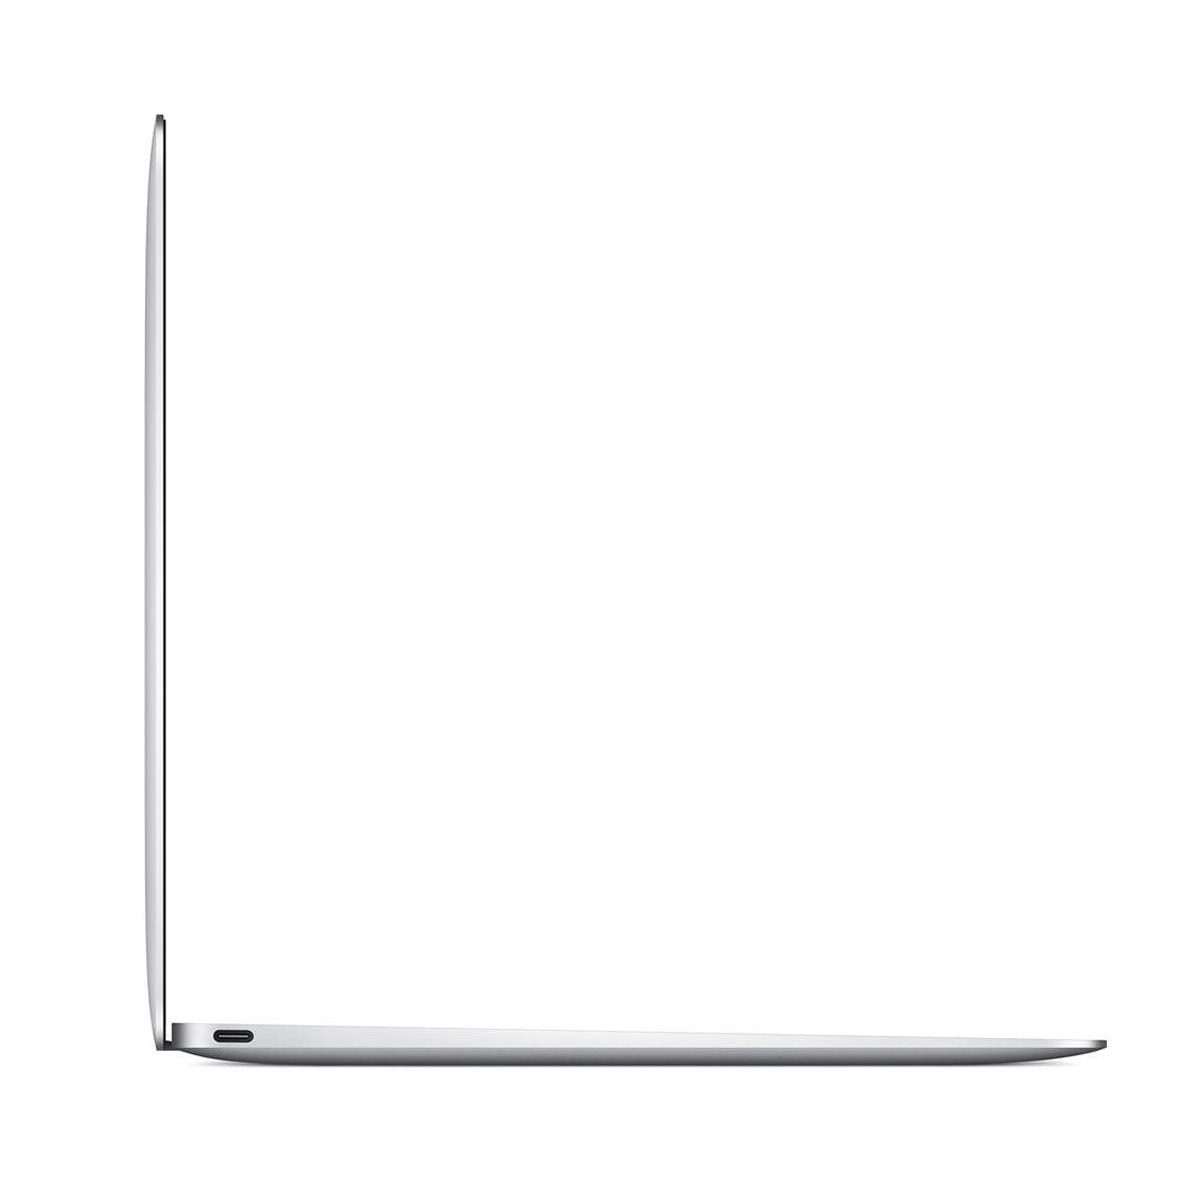 Ноутбук Apple MacBook 12 2016 Silver (MLHA2RU/A) (Core m3 1100Mhz/12.0/2304x1440/8.0Gb/256Gb SSD/DVD нет/Intel HD Graphics 515/Wi-Fi/Bluetooth/MacOS X)